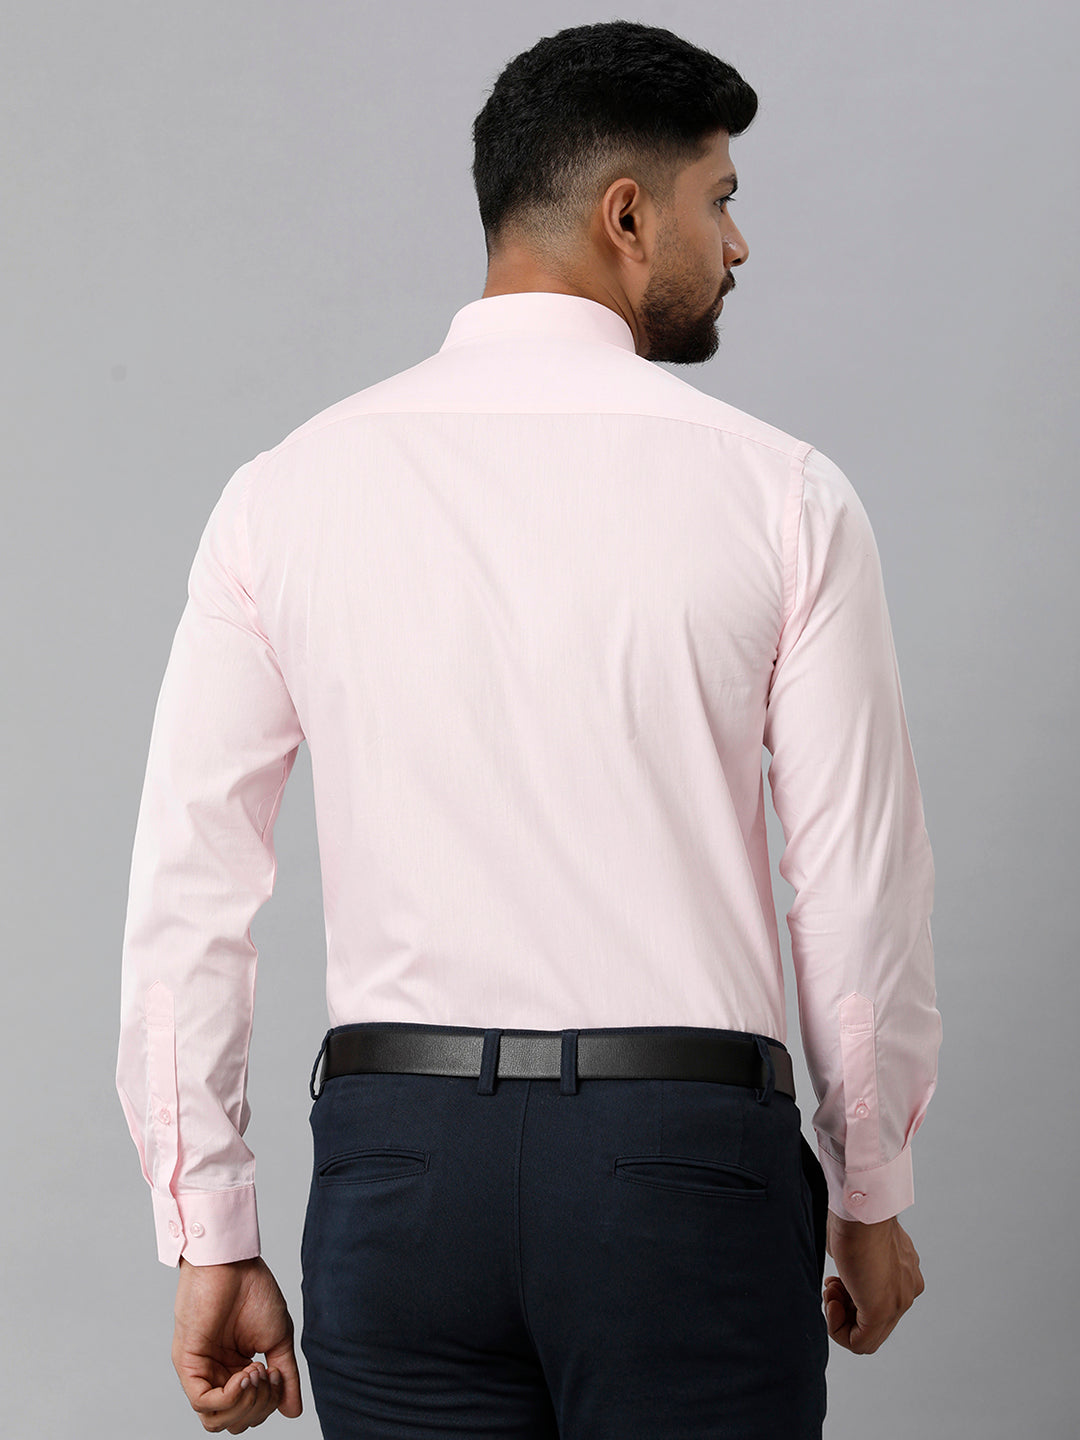 Mens Premium Cotton Formal Shirt Full Sleeves Light Pink MH G115-Back view